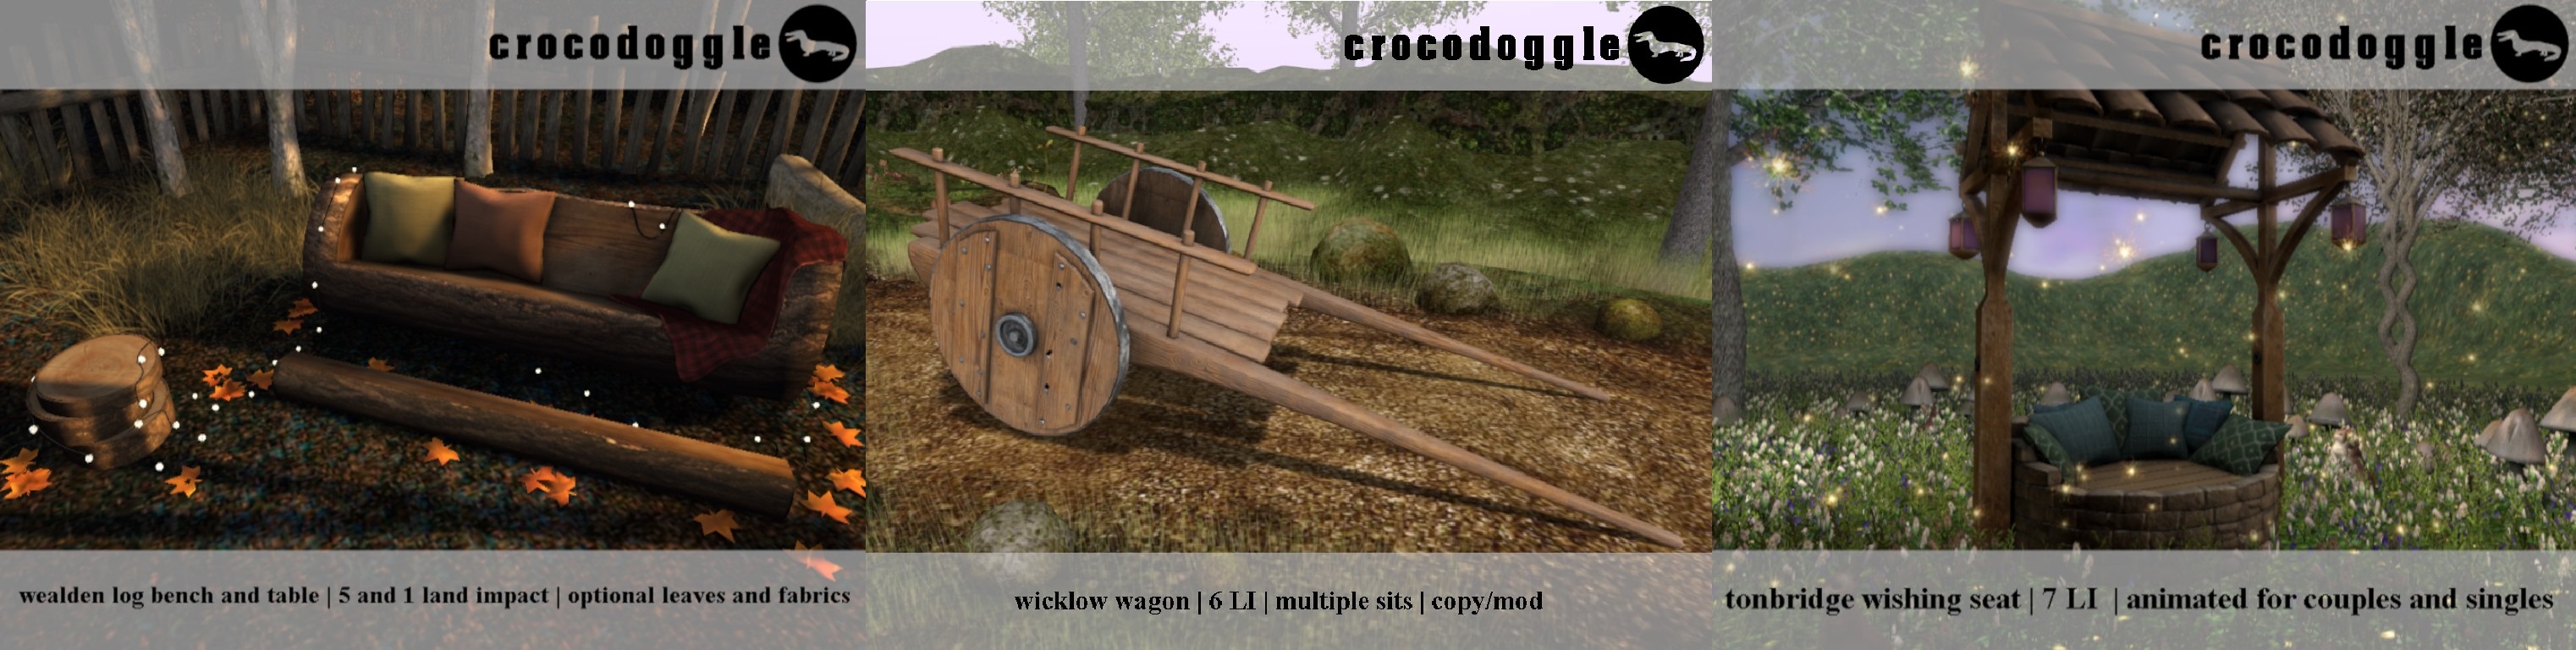 Crocodoggle – Wealden Log Bench and Table, Wicklow Wagon, & Tonbridge Wishing Seat